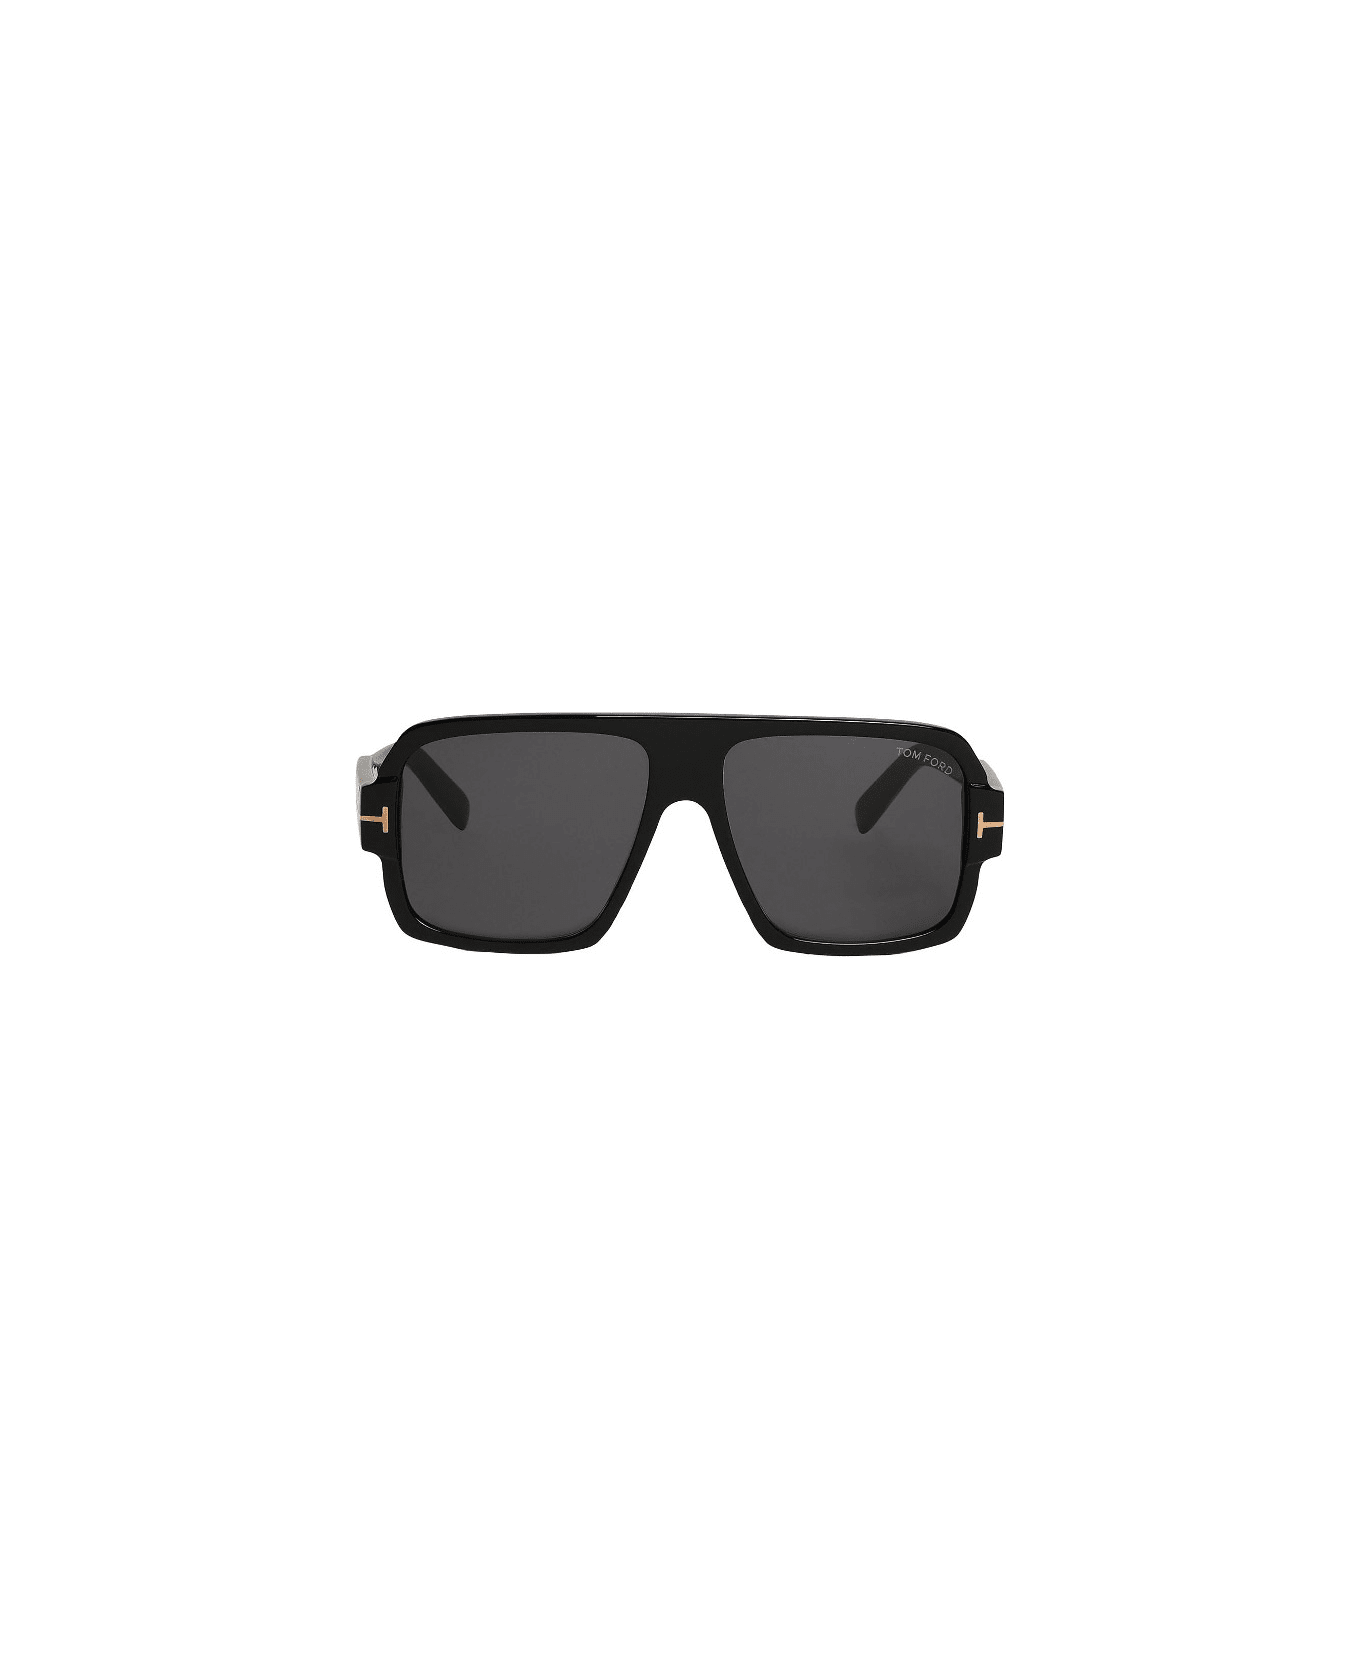 Tom Ford Eyewear FT933 01A Sunglasses